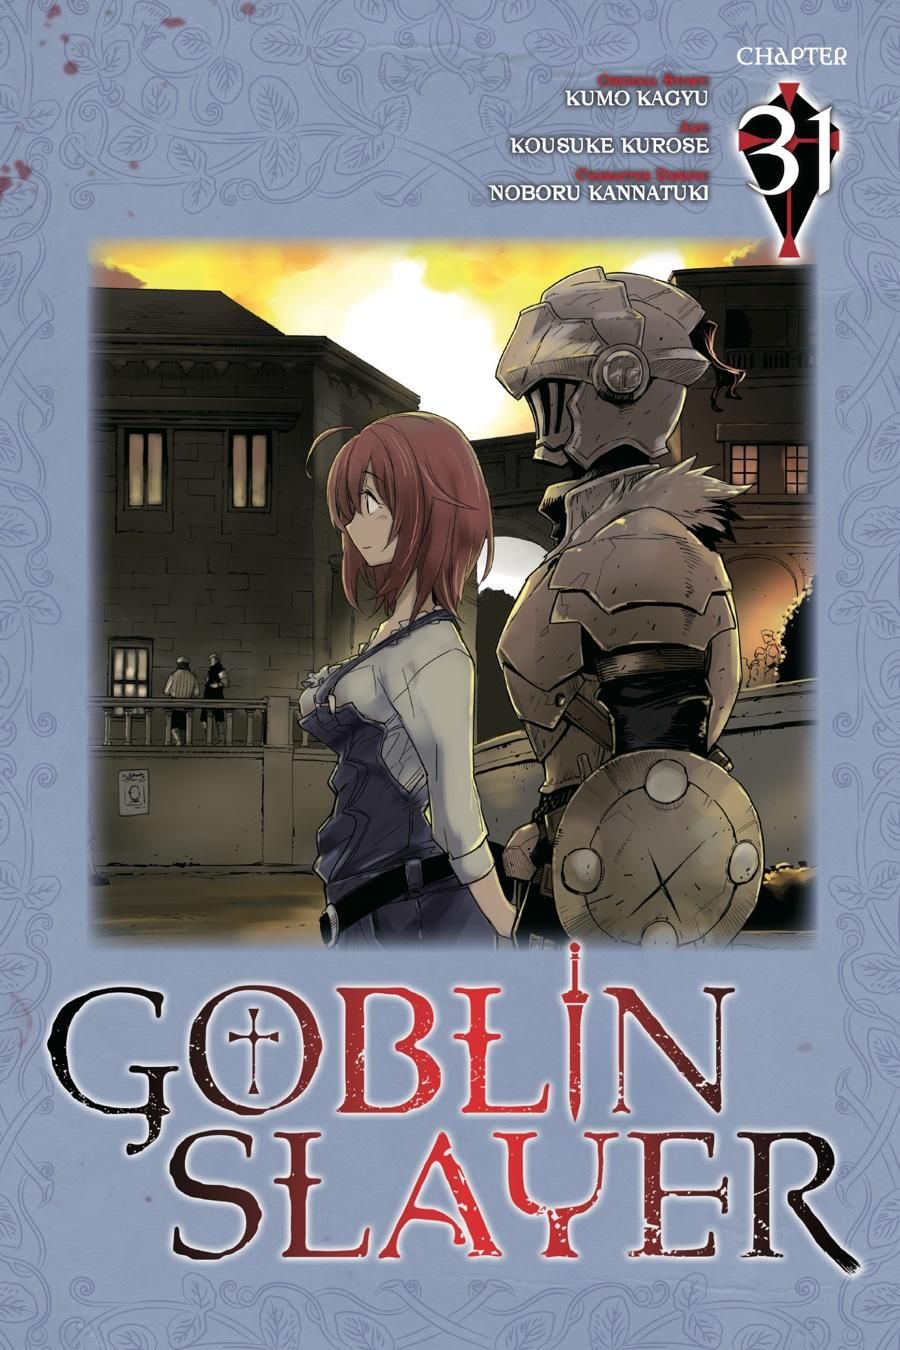 Manga Volume 3, Goblin Slayer Wiki